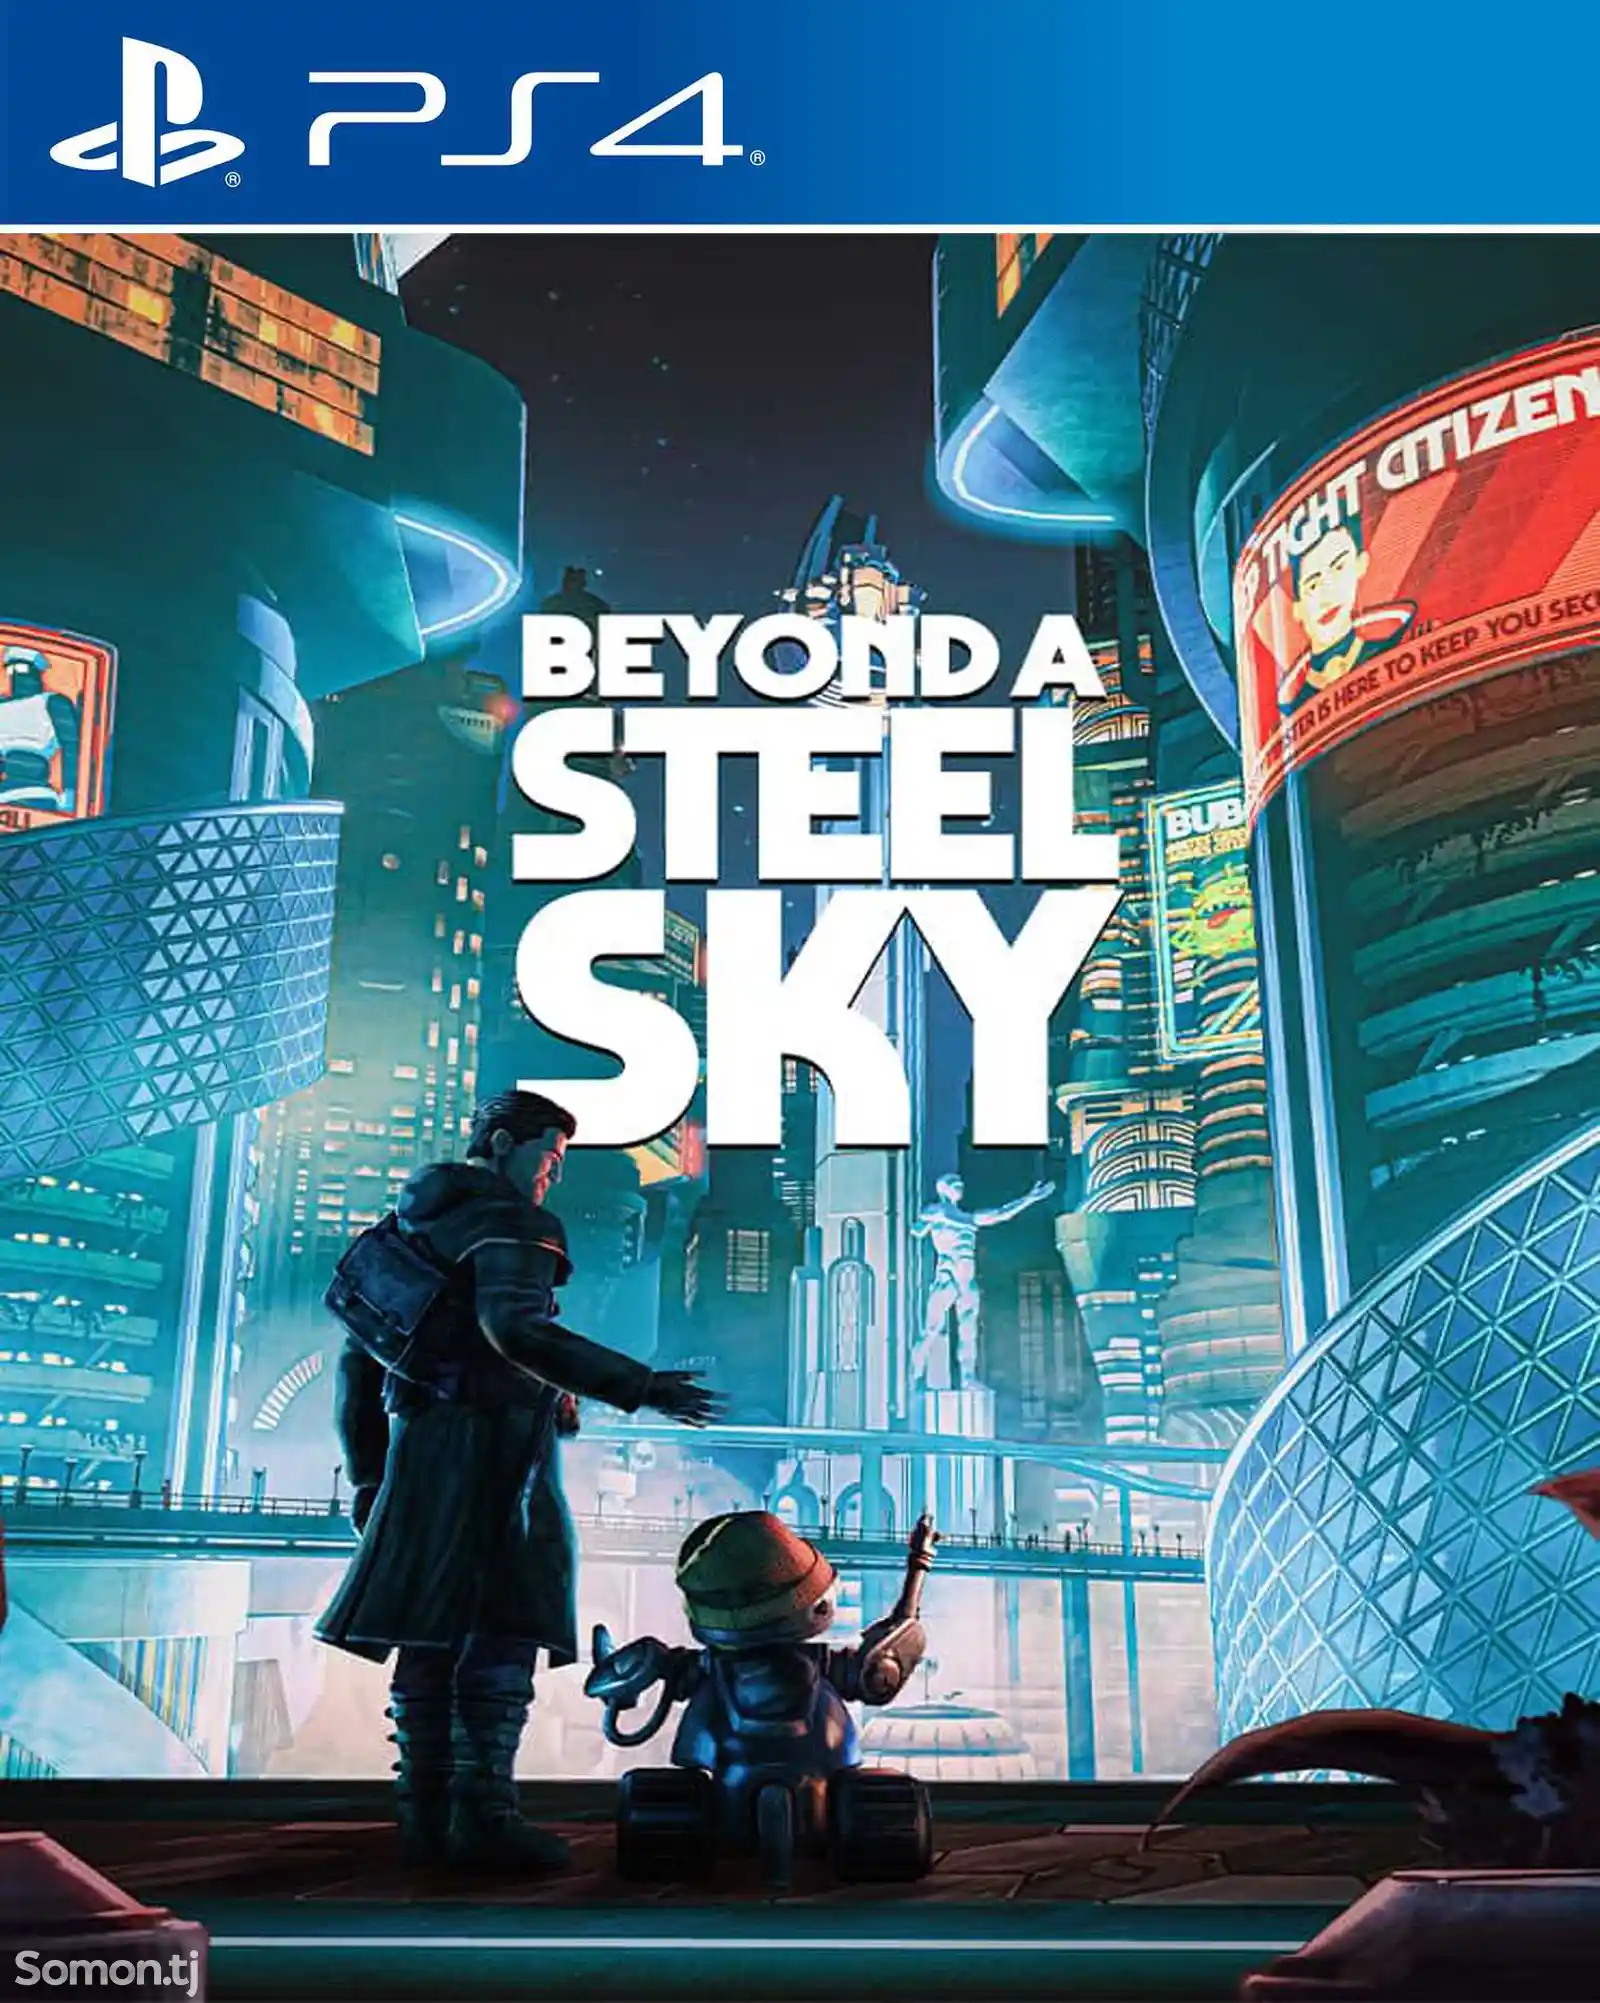 Игра Beyond a steel sky для PS-4 / 5.05 / 6.72 / 7.02 / 7.55 / 9.00 /-1